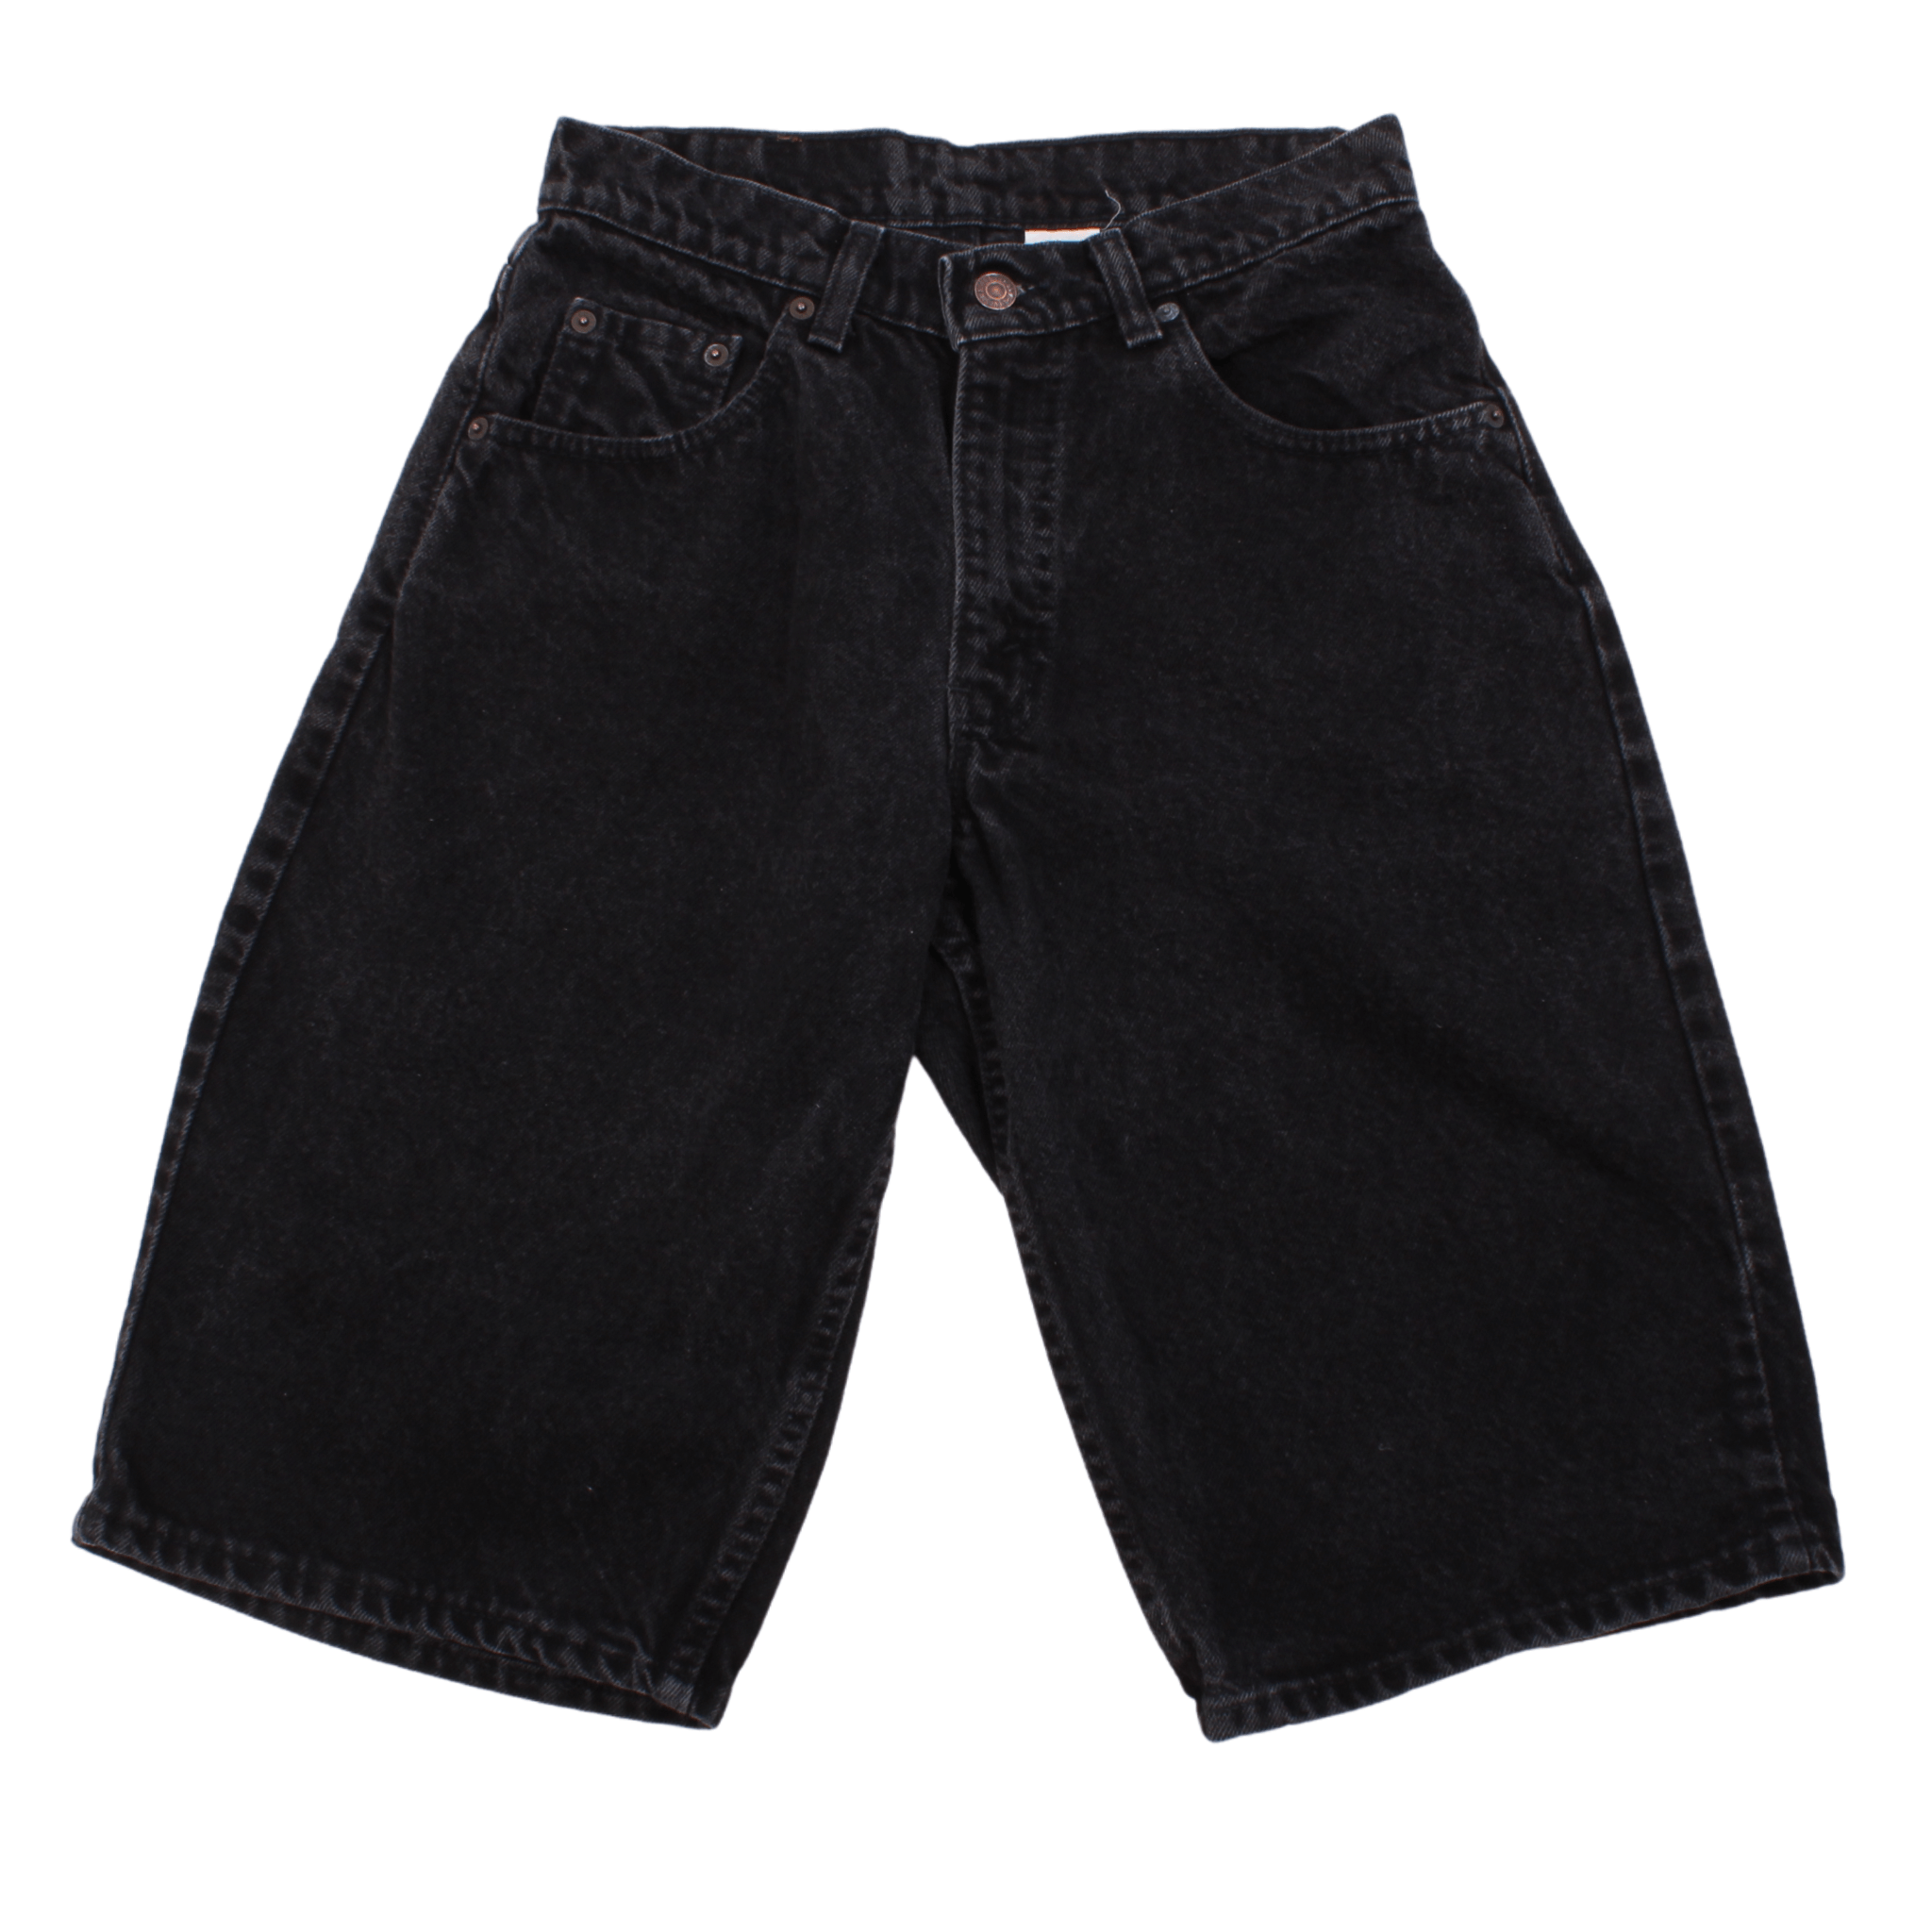 Vintage Levis Denim Shorts (28